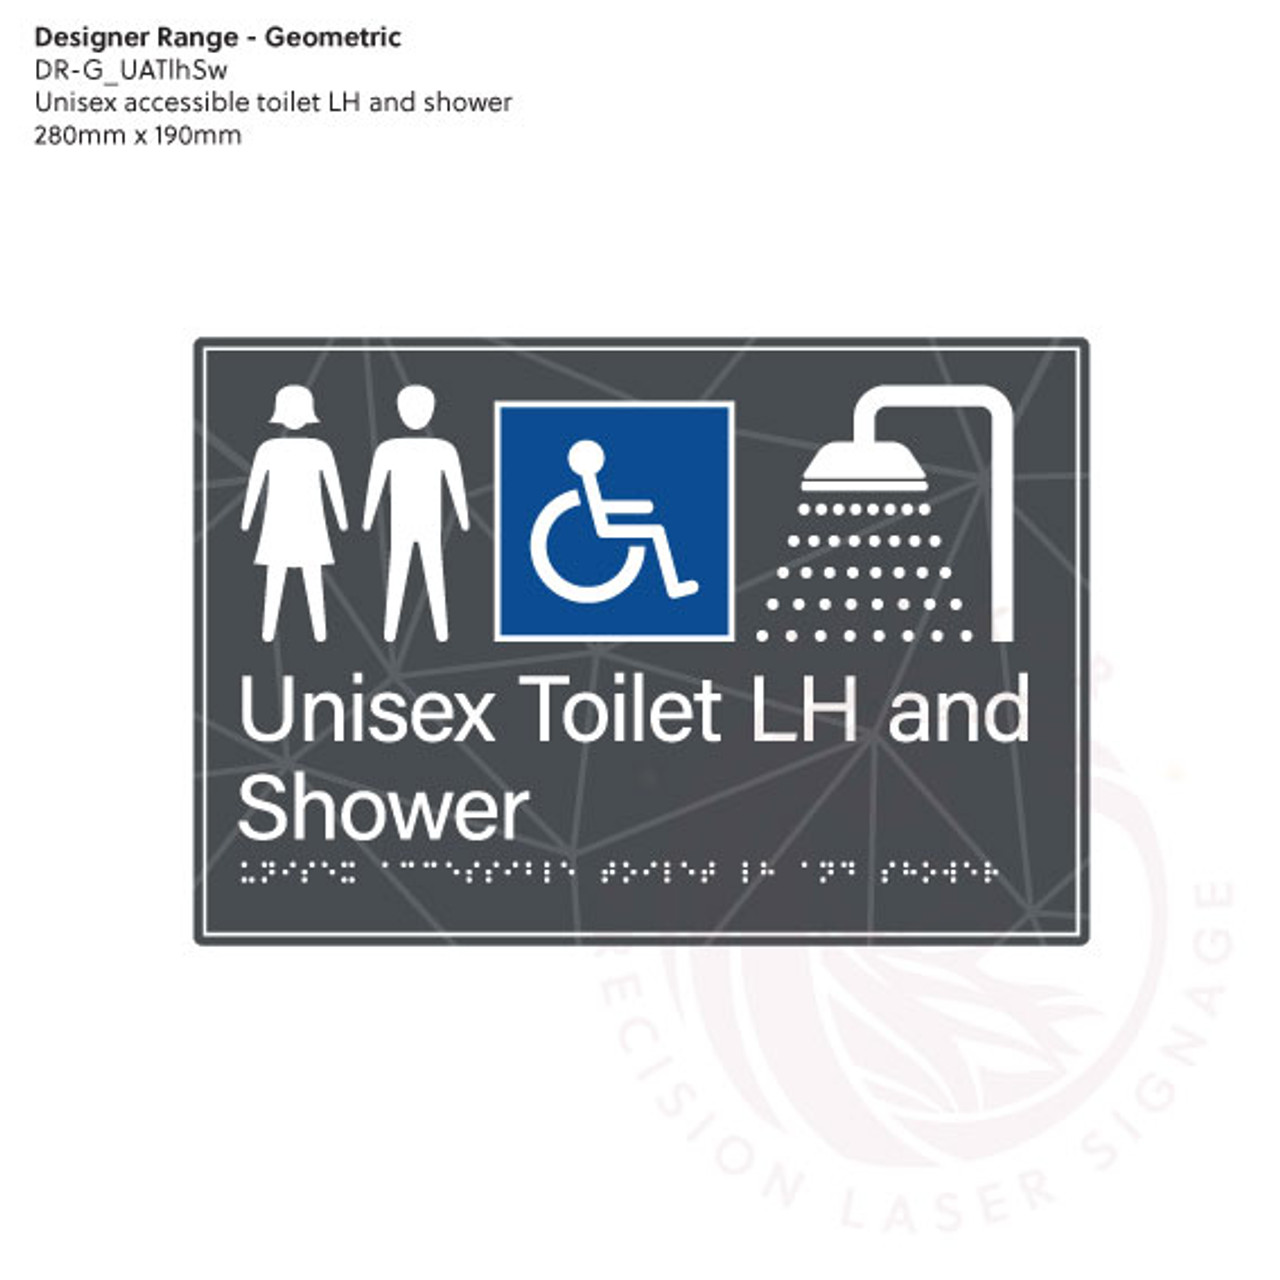 Geometric Designer Range - Unisex Accessible Toilet LH and Shower